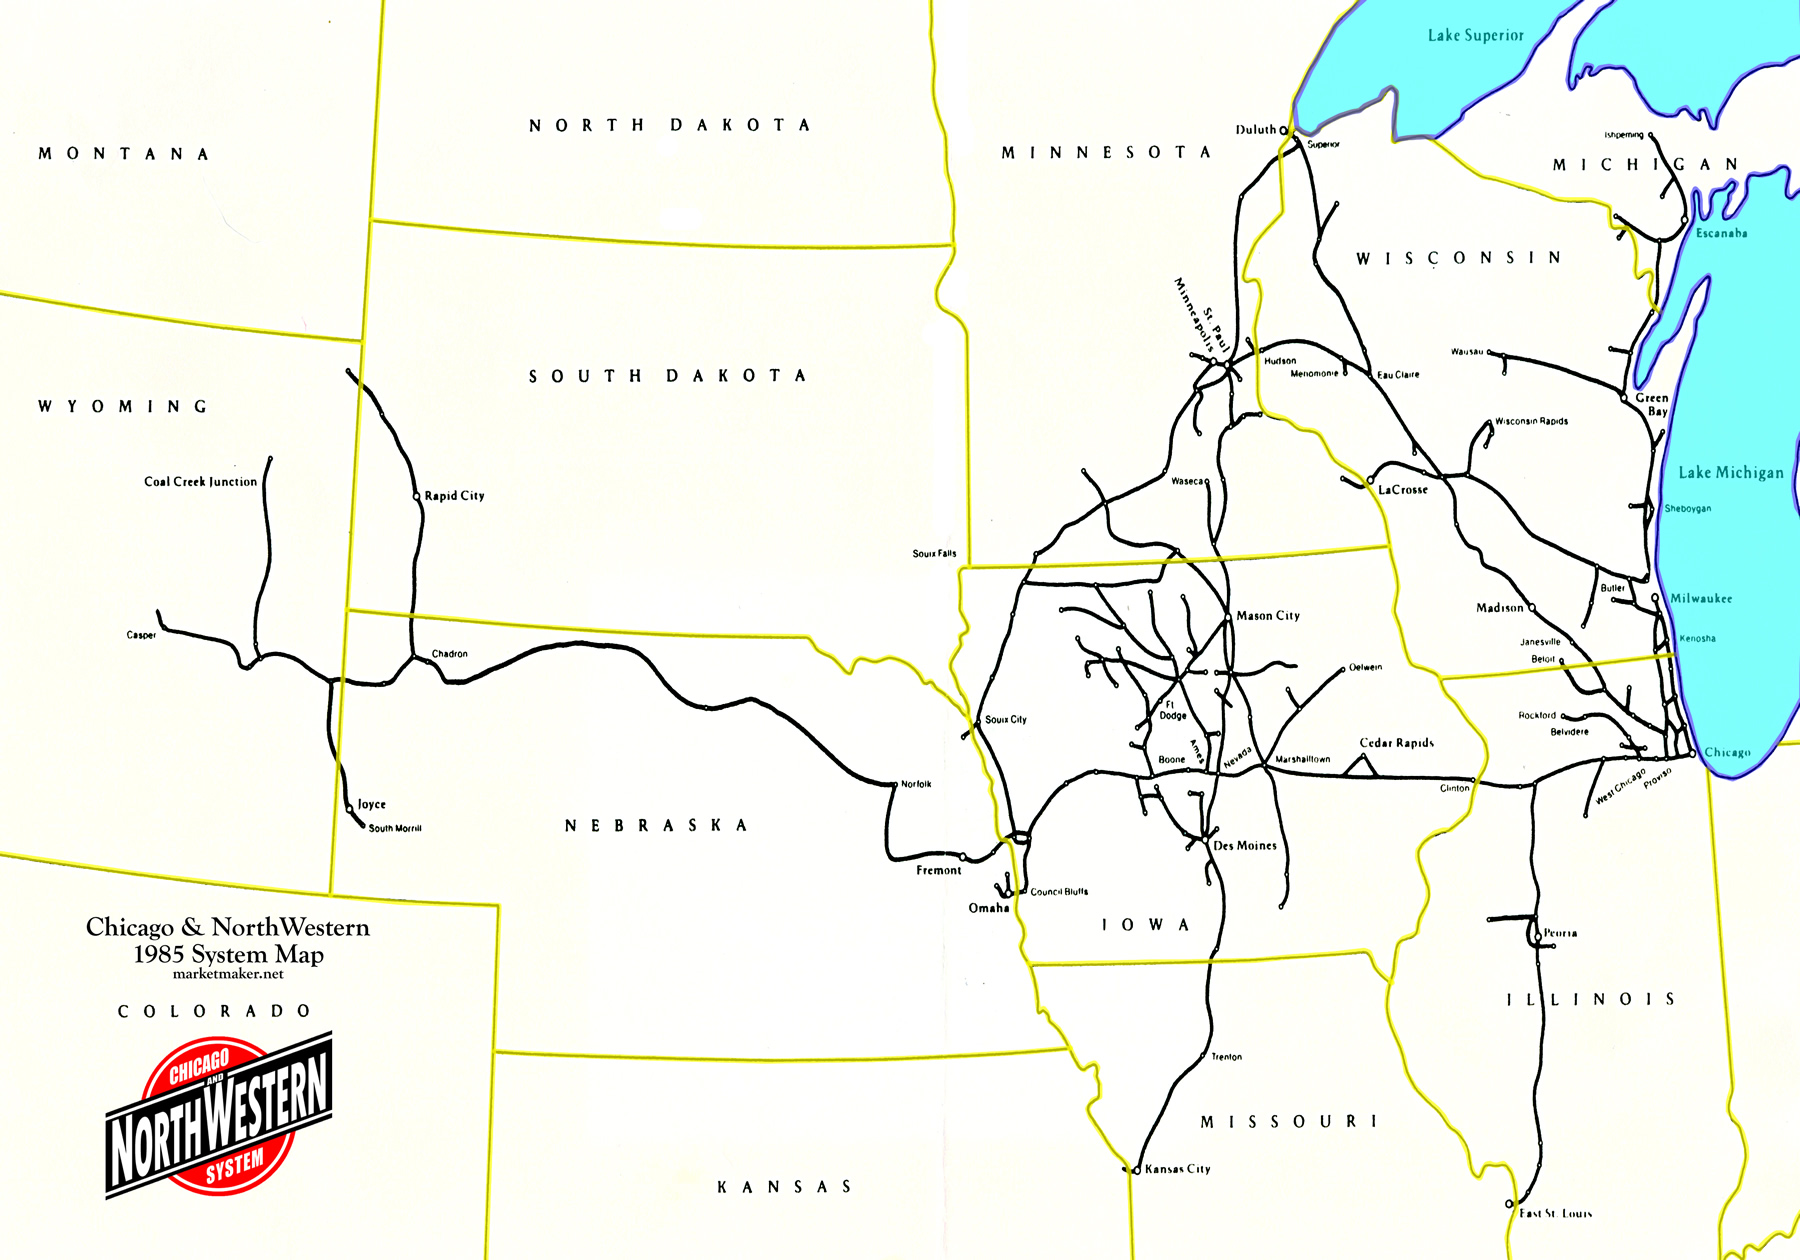 Chicago & NorthWestern 1985 System Map